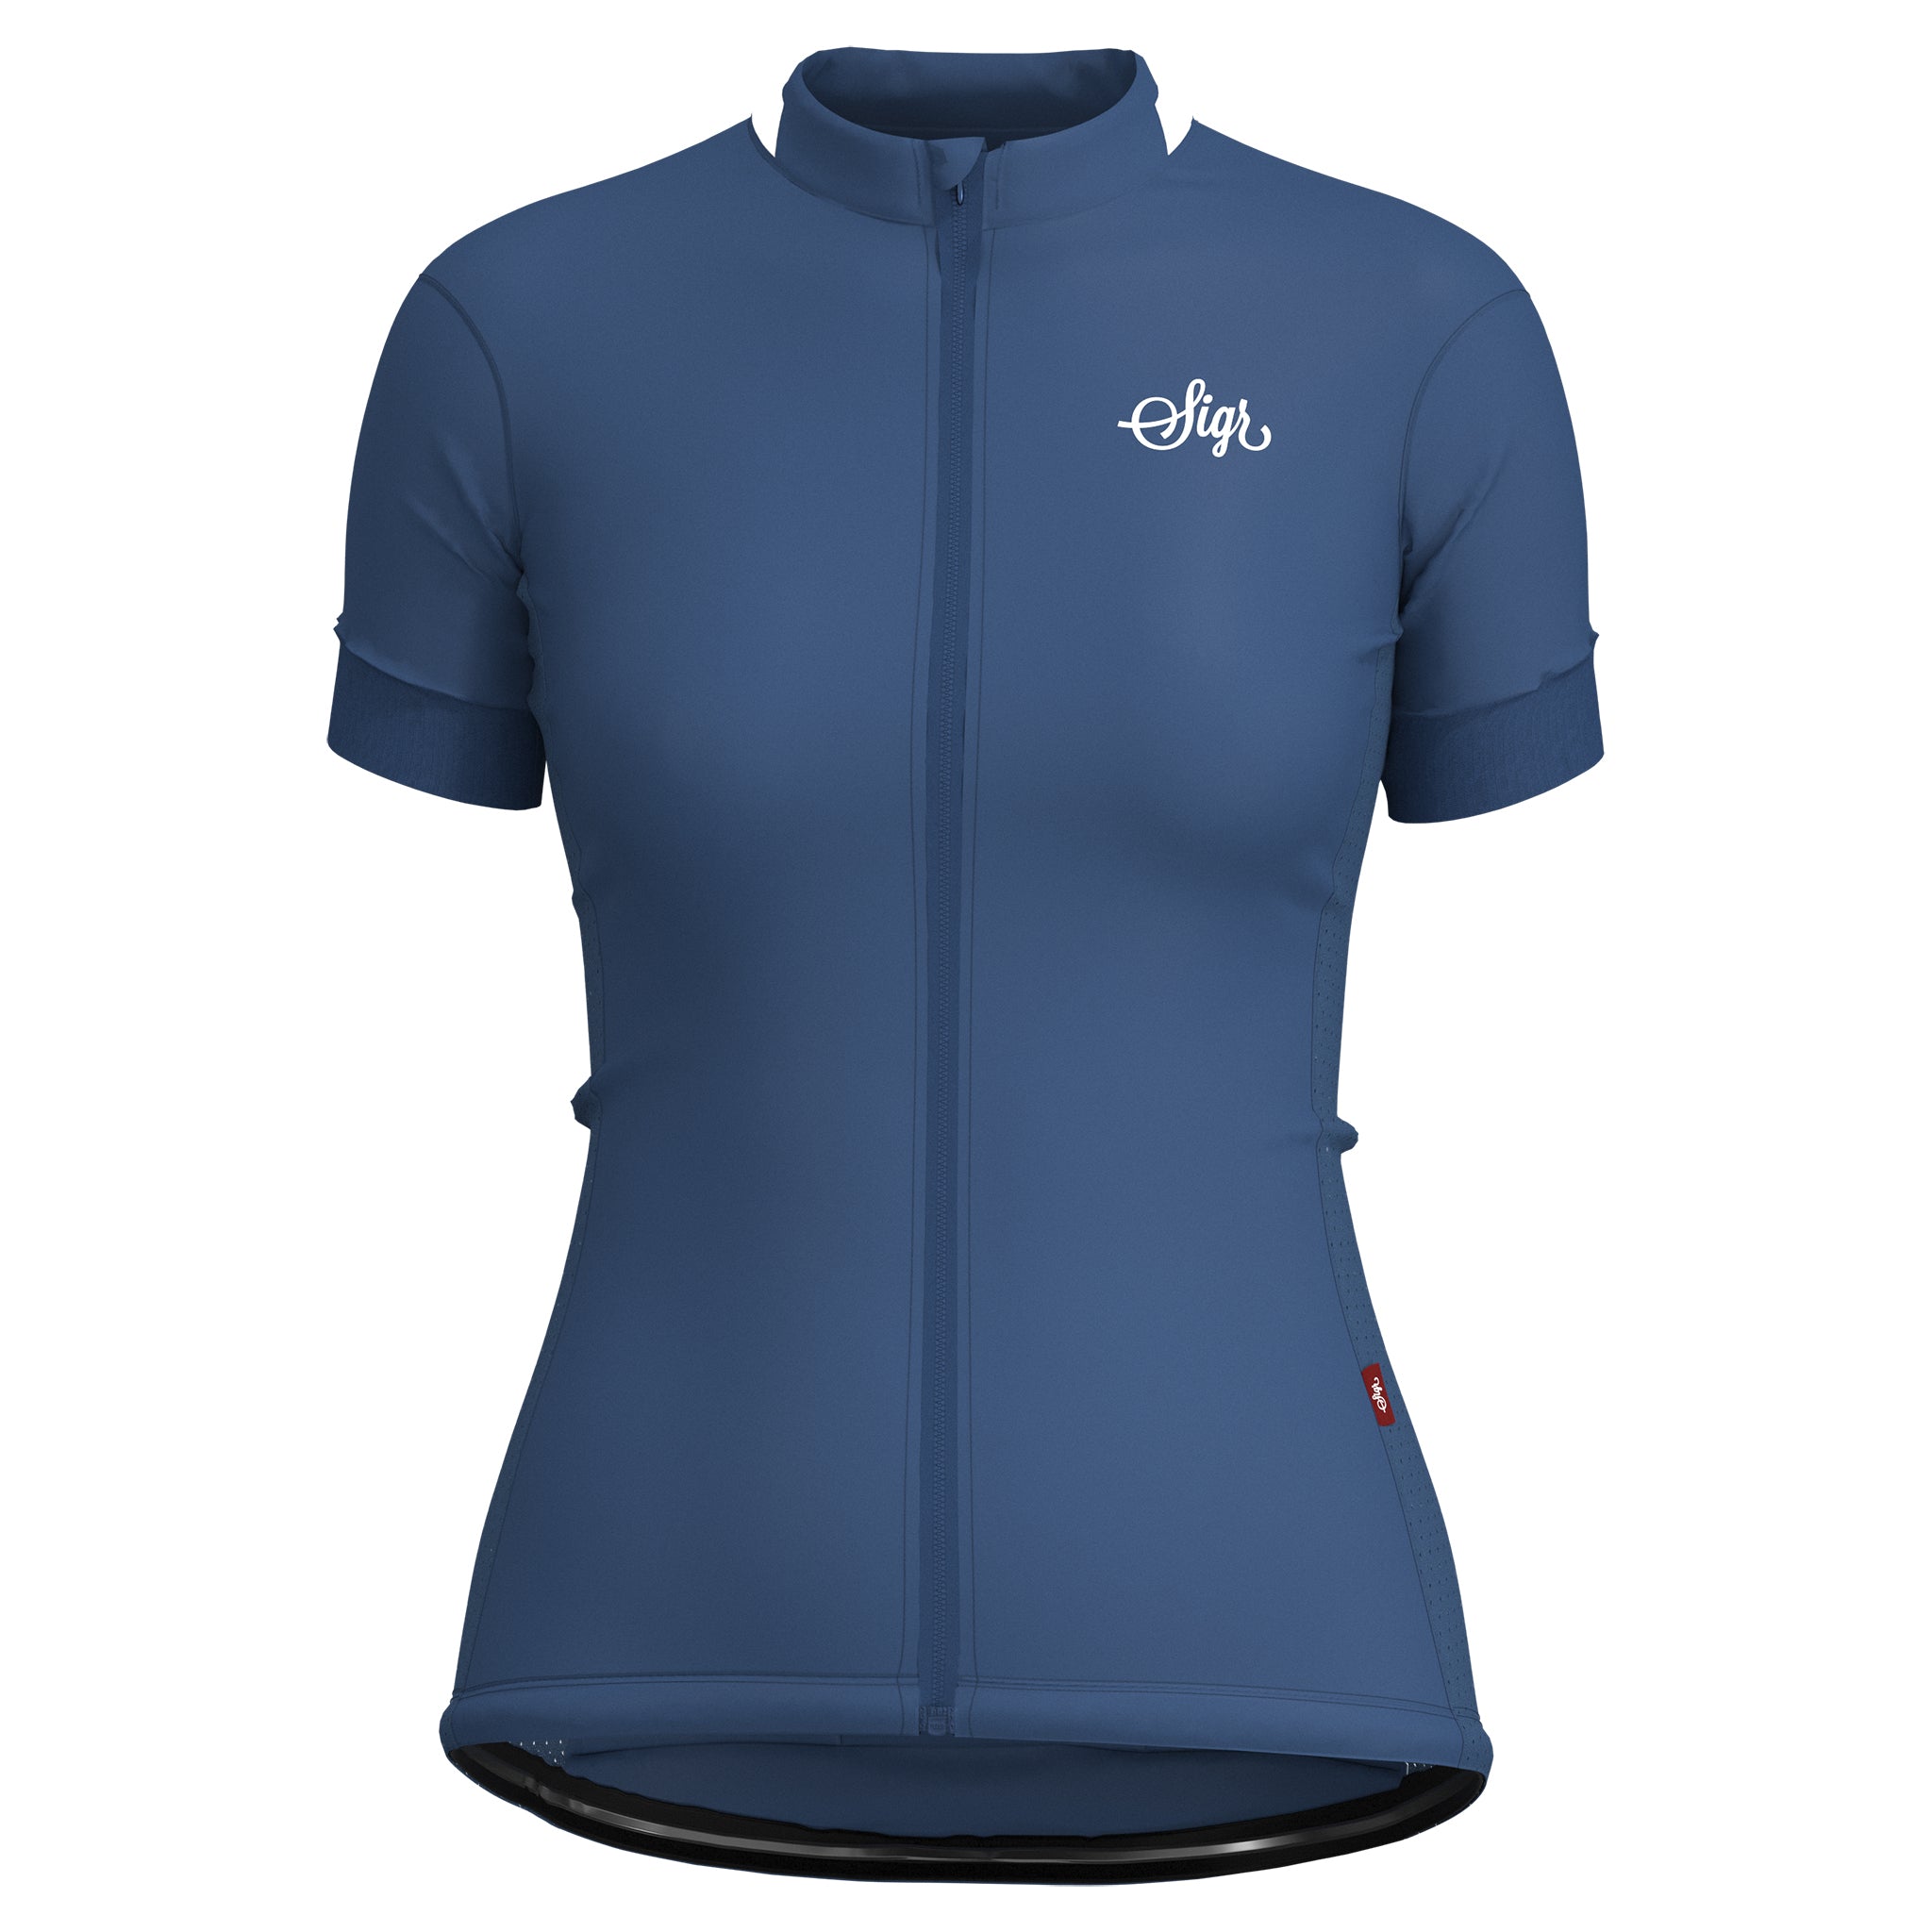 light blue cycling jersey